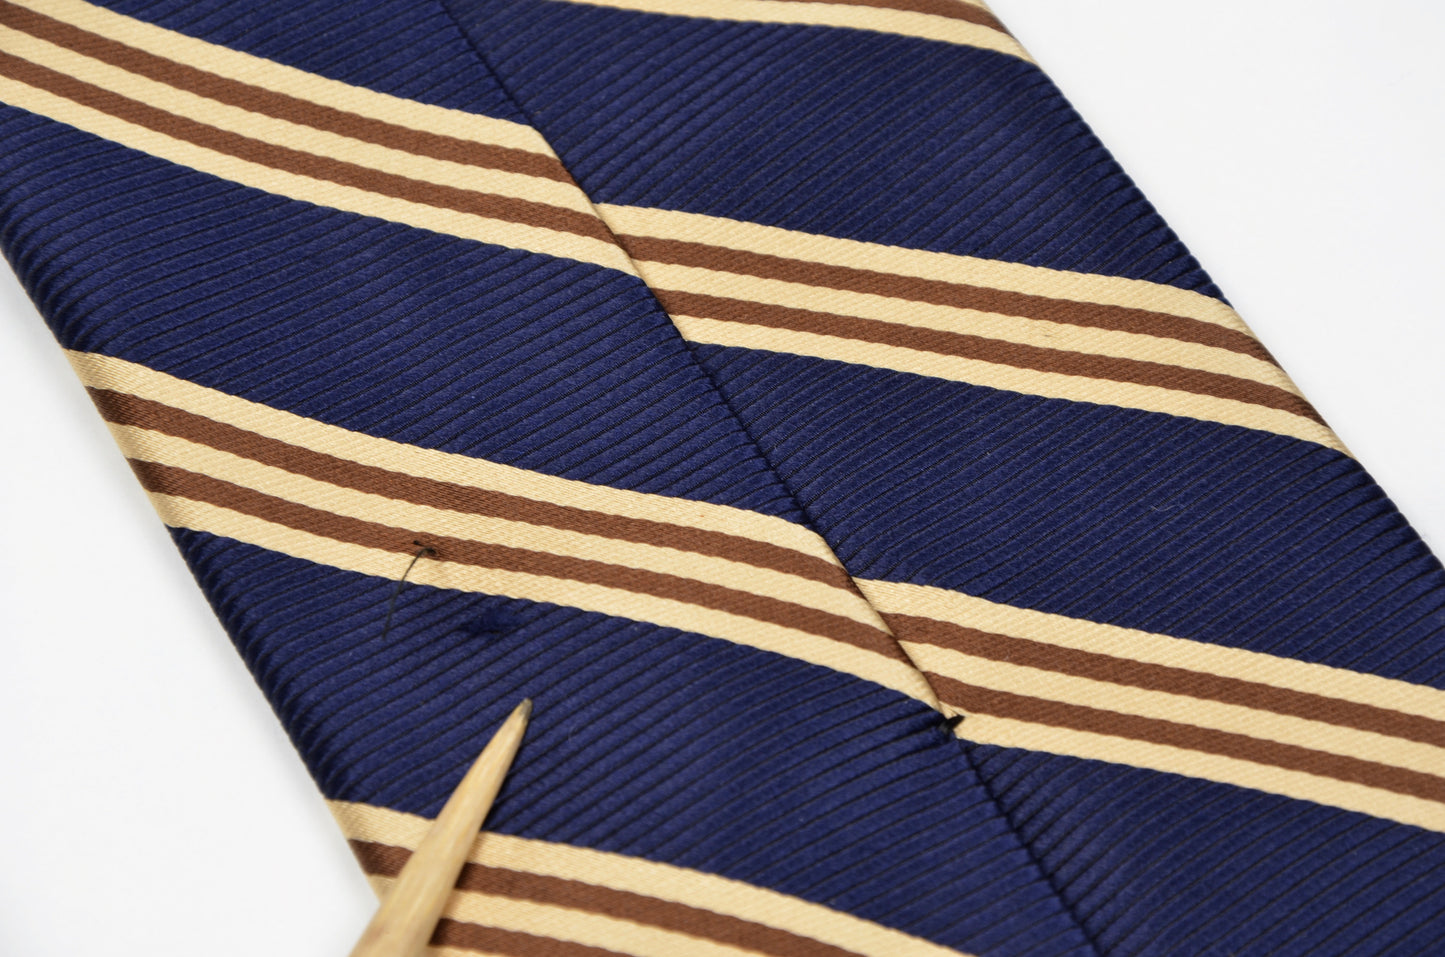 Brooks Brothers Classic Gestreifte Krawatte - Blau